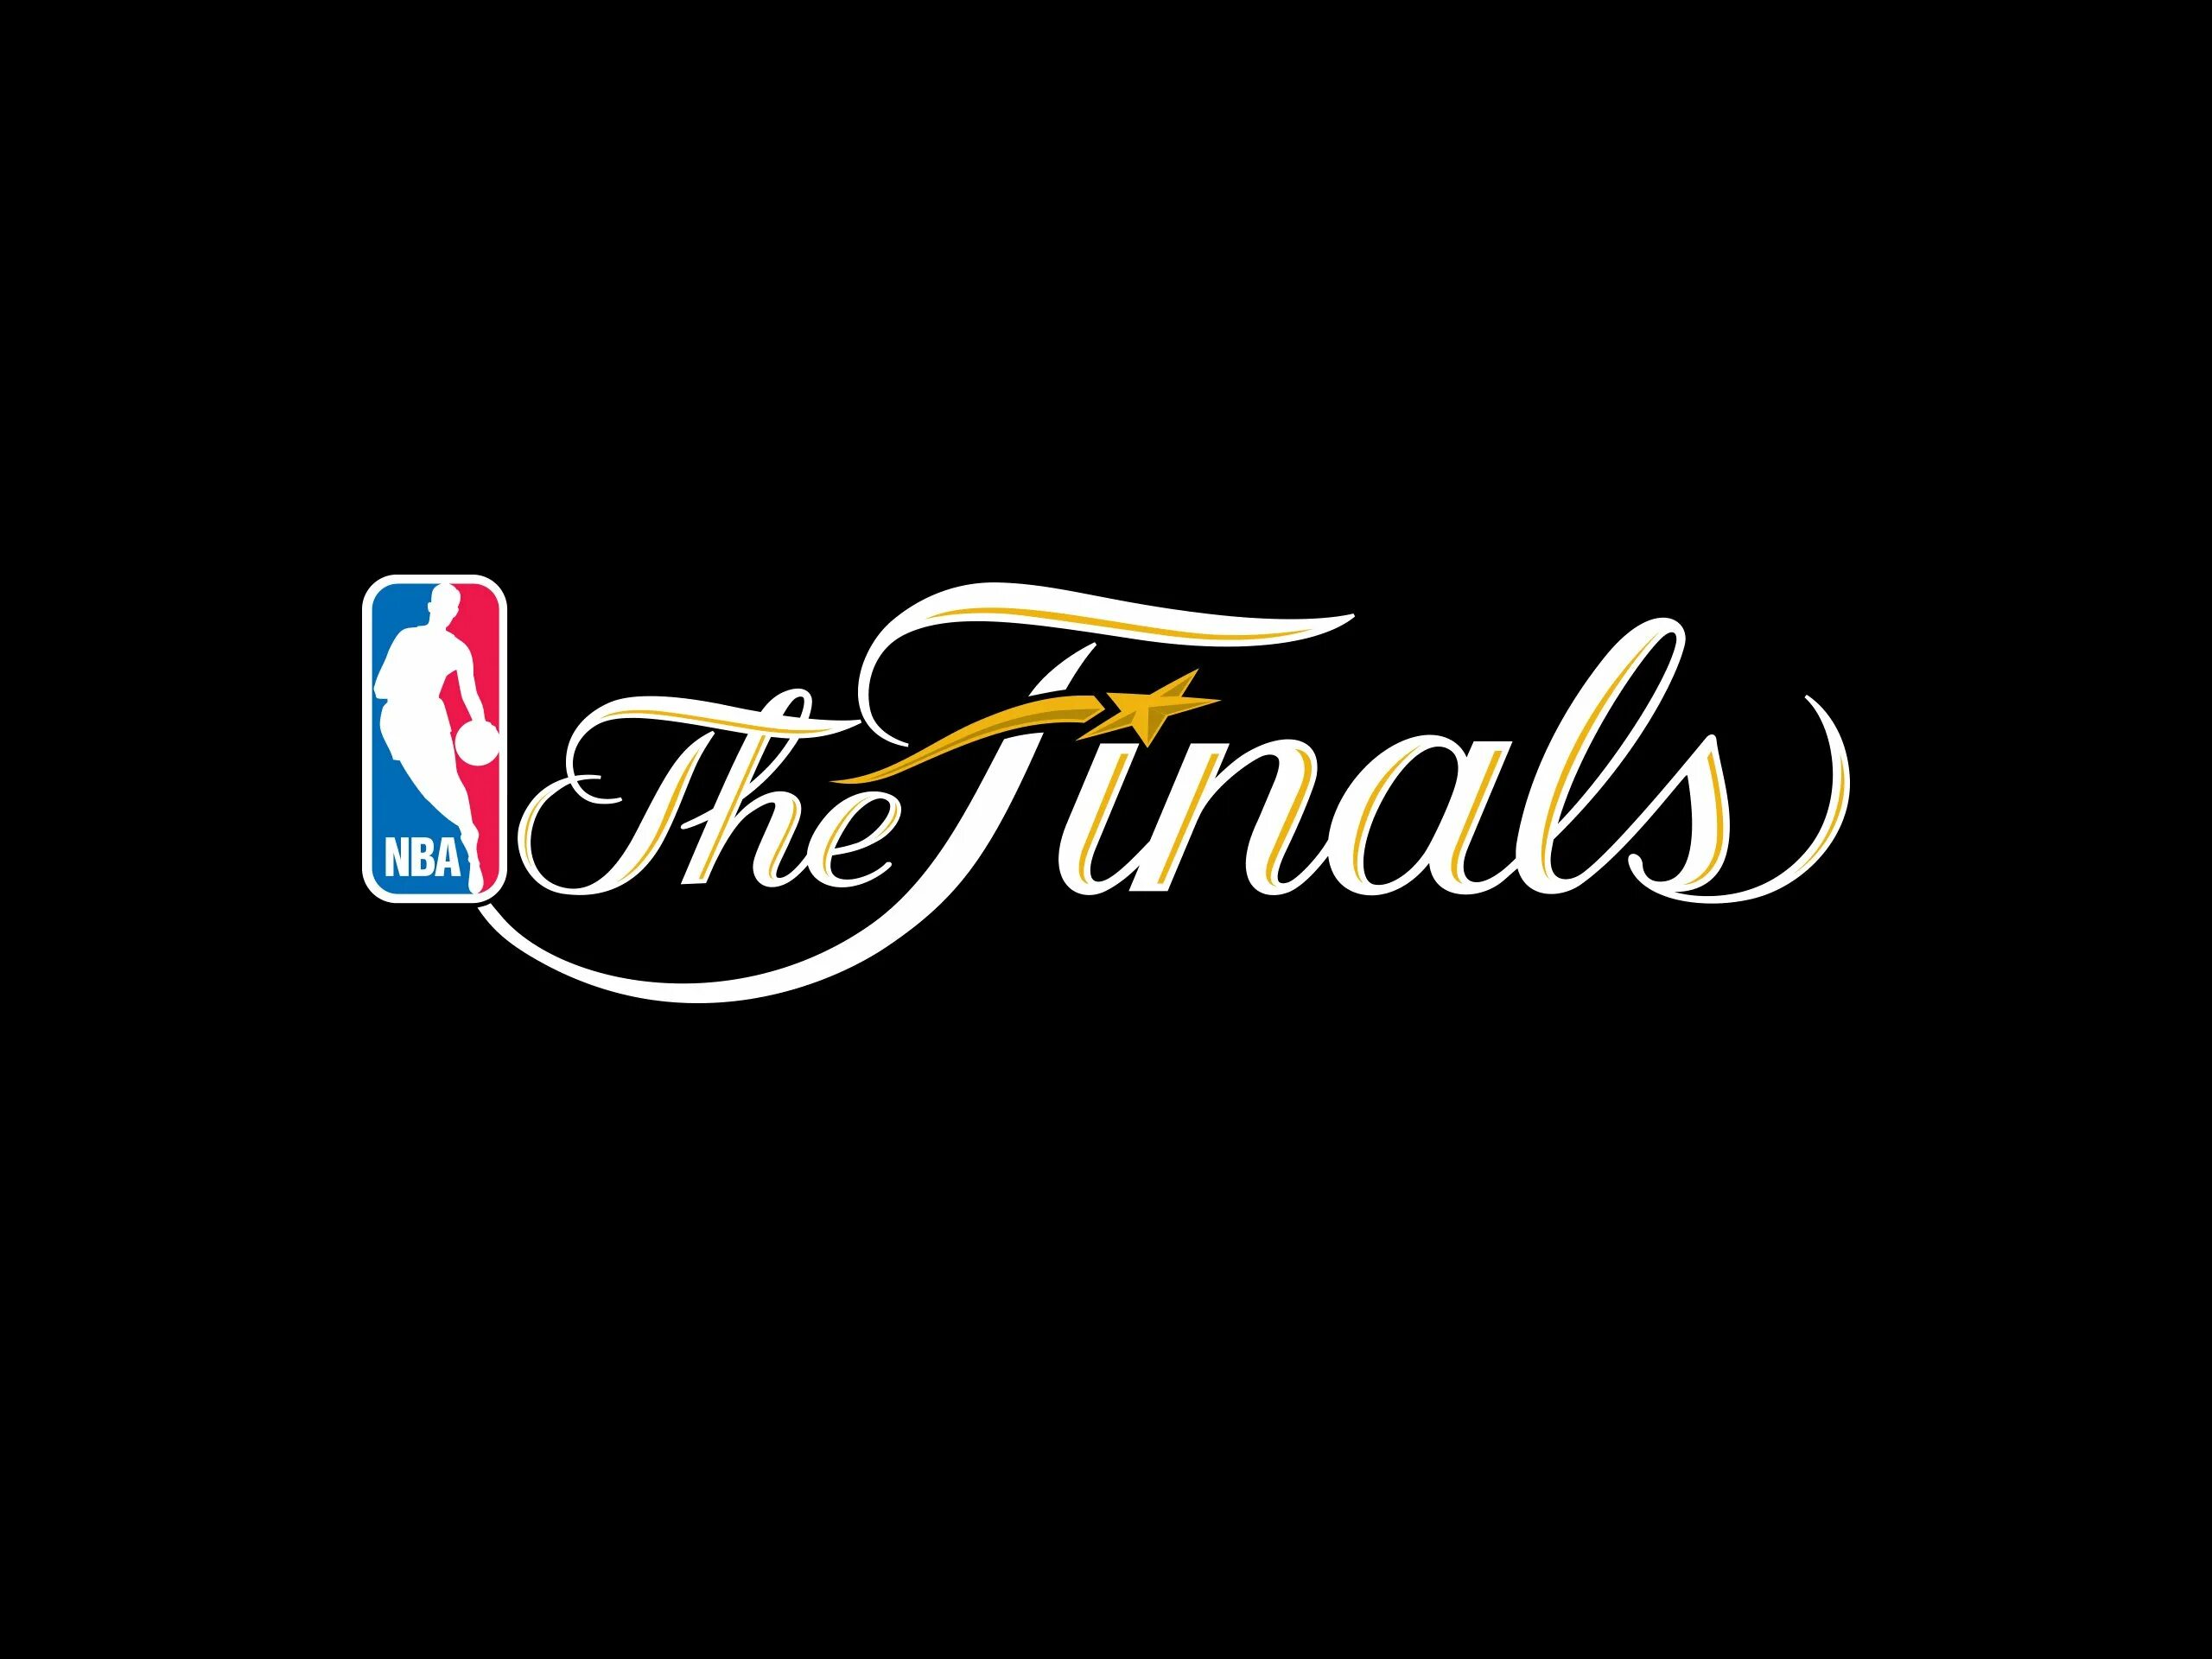 NBA логотип. NBA Finals. The Finals лого. Еру аштфды лого.